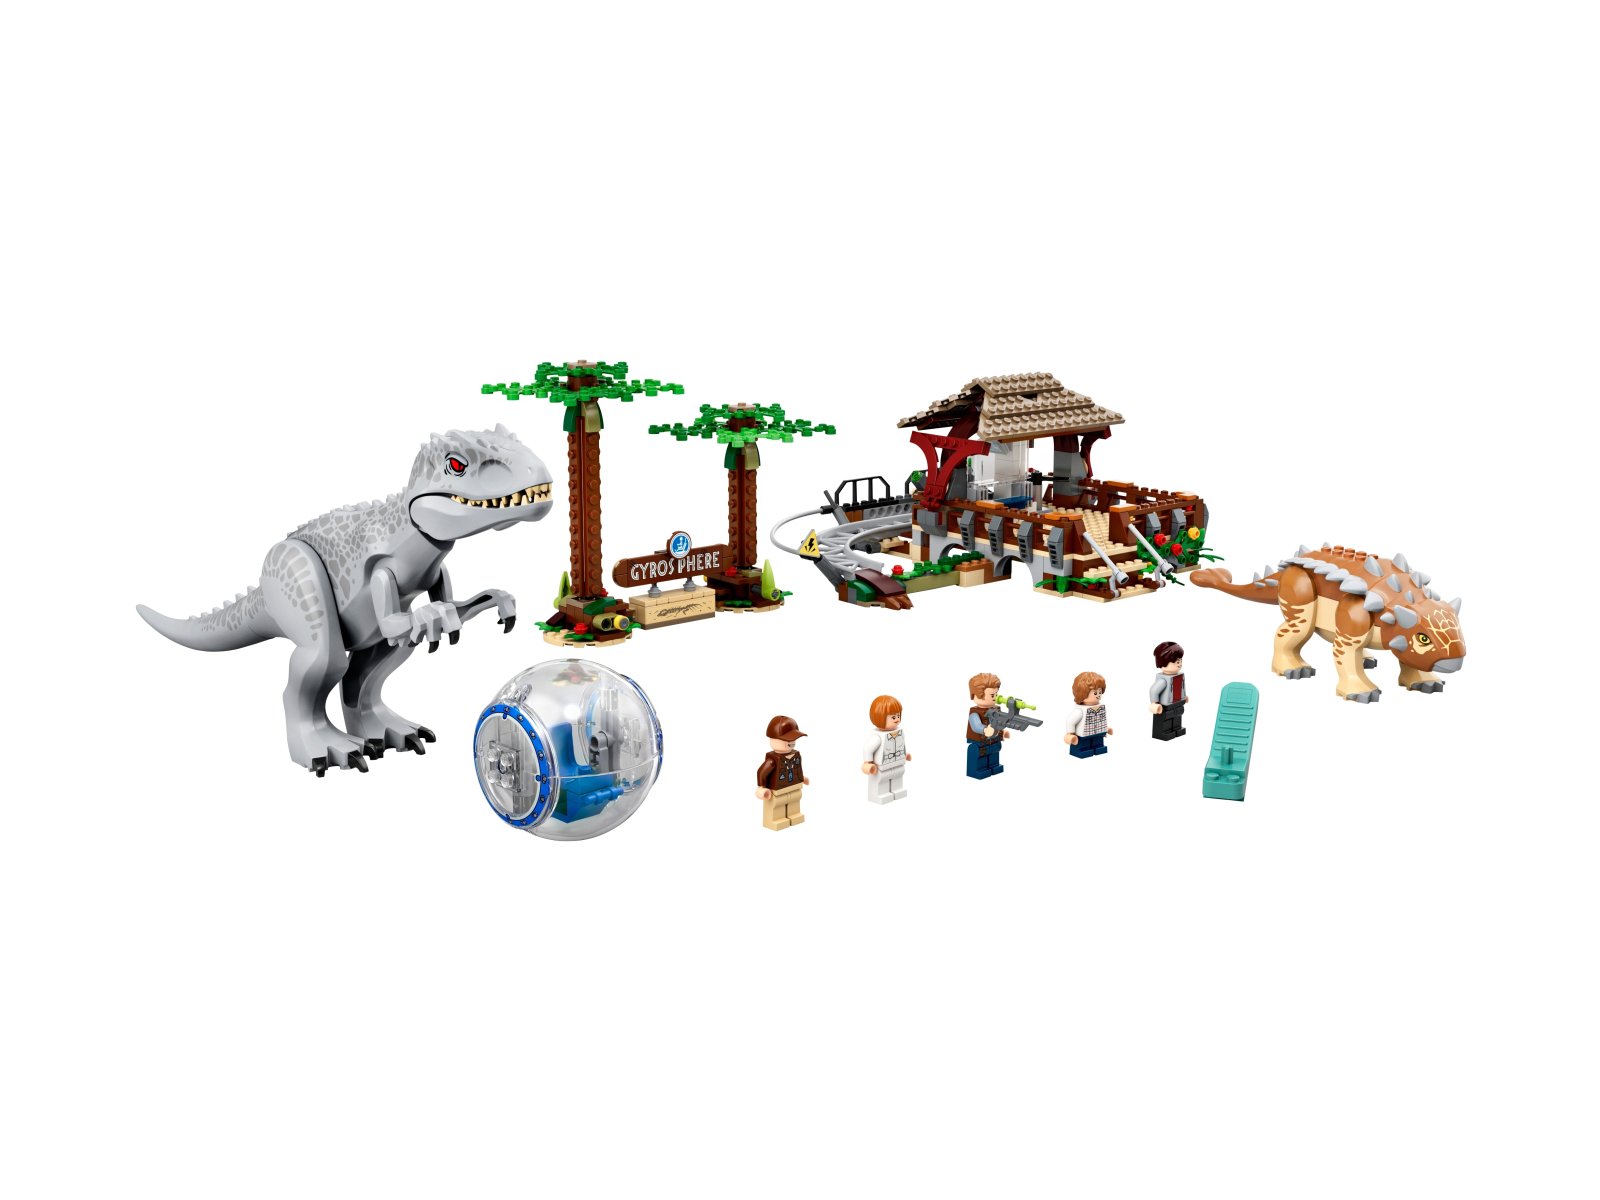 LEGO Jurassic World 75941 Indominus Rex kontra ankylozaur